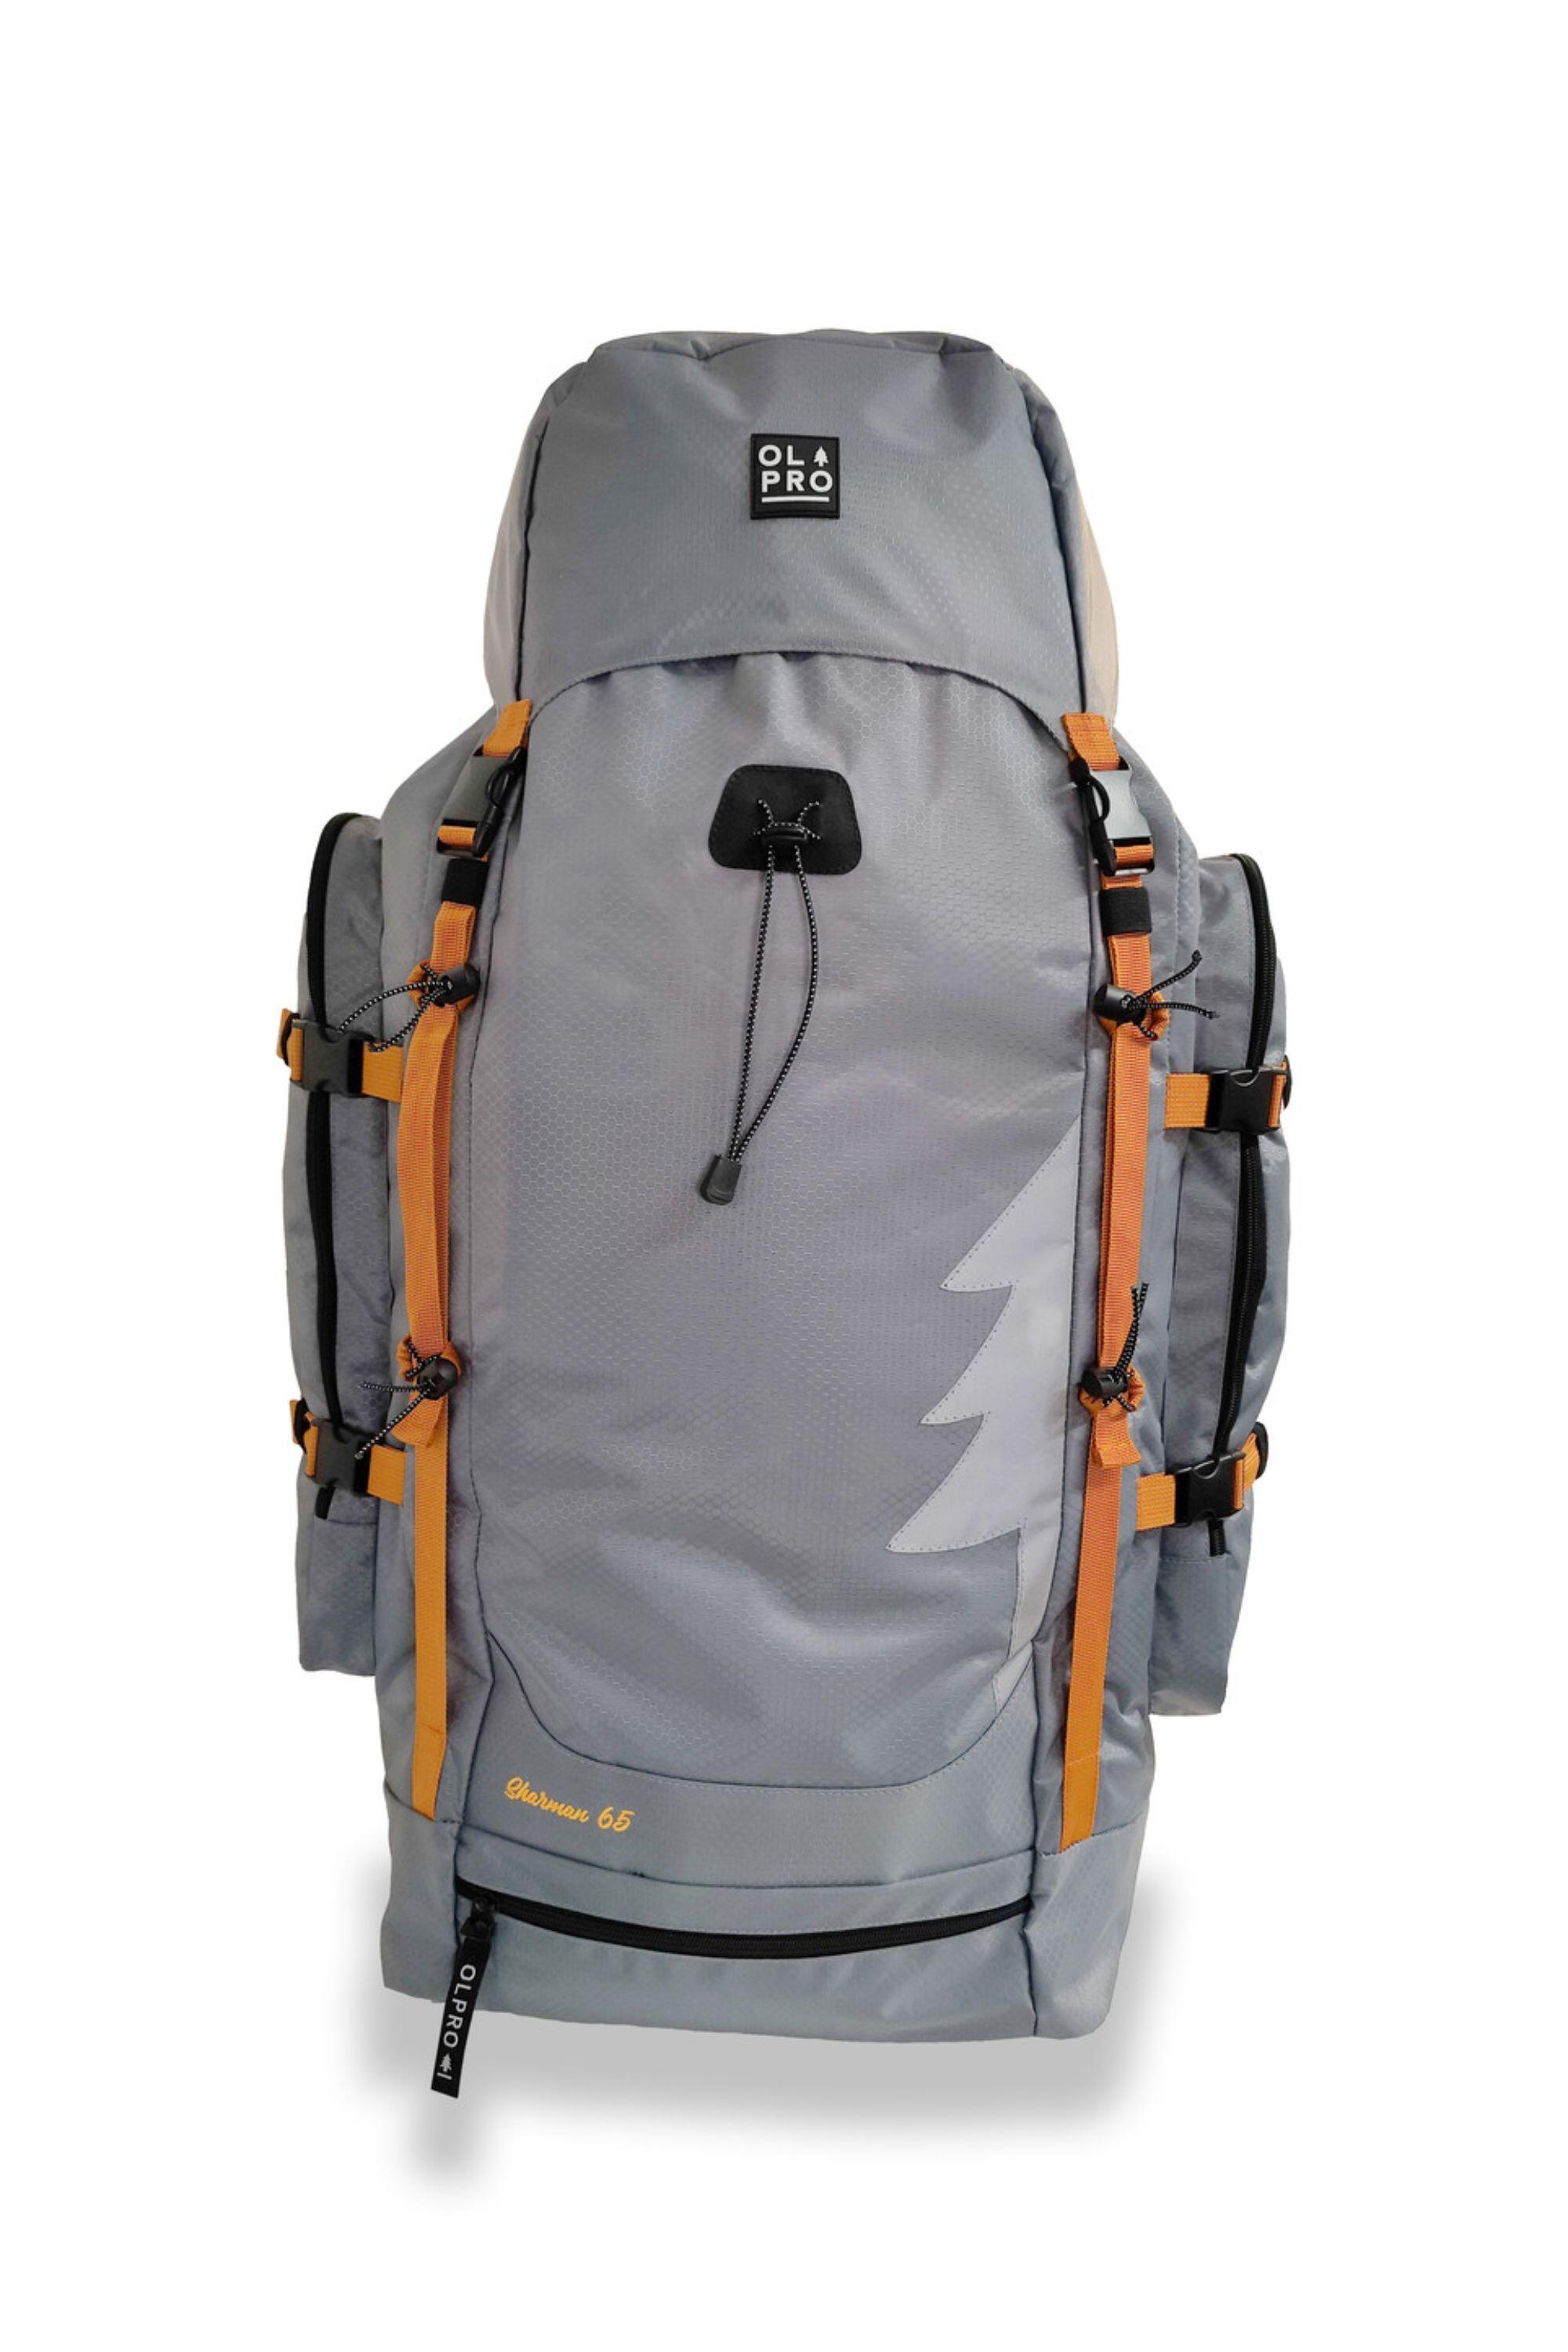 OLPRO 65L Rucksack Bag Grey 4/5